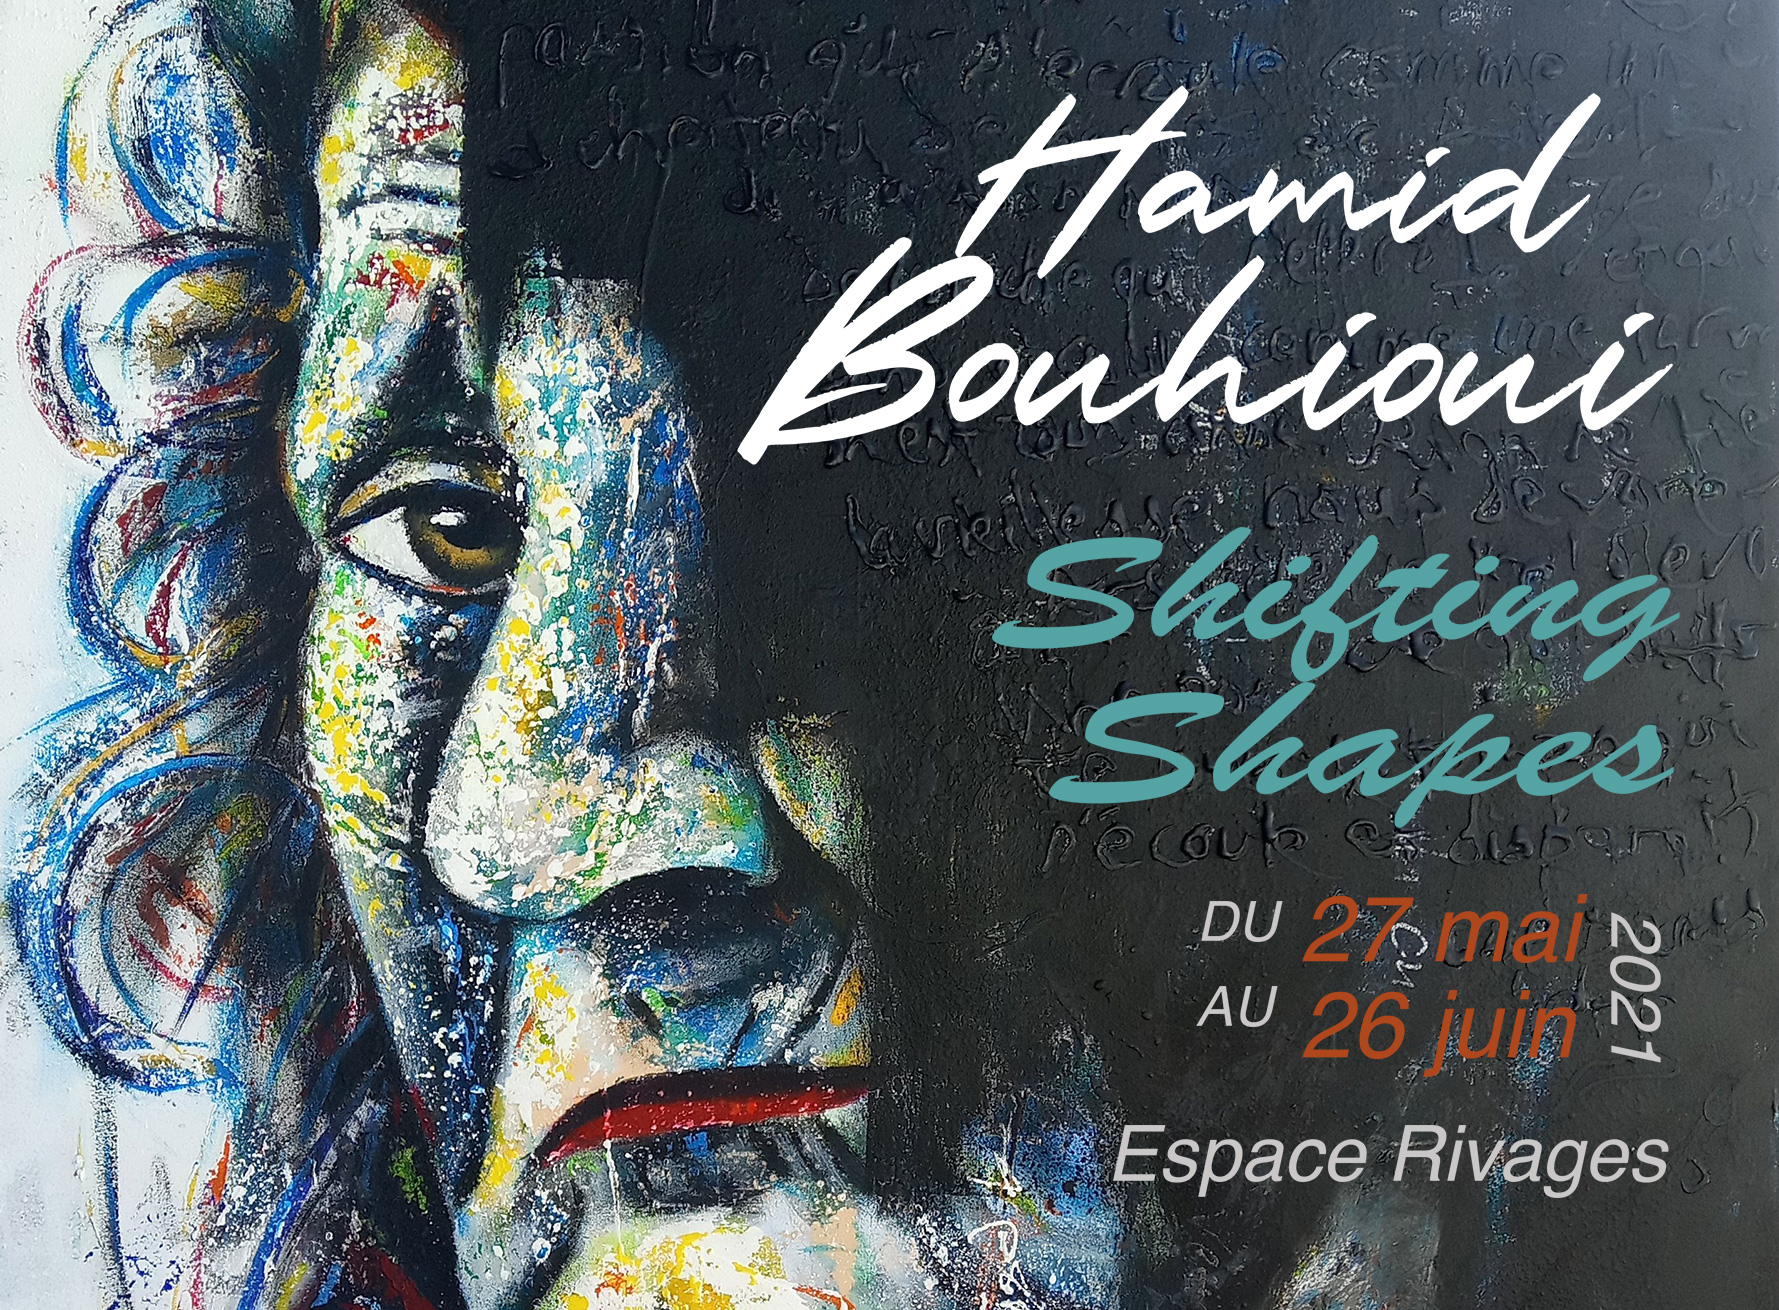 Exposition Hamid BOUHIOUI – Shifting Shapes